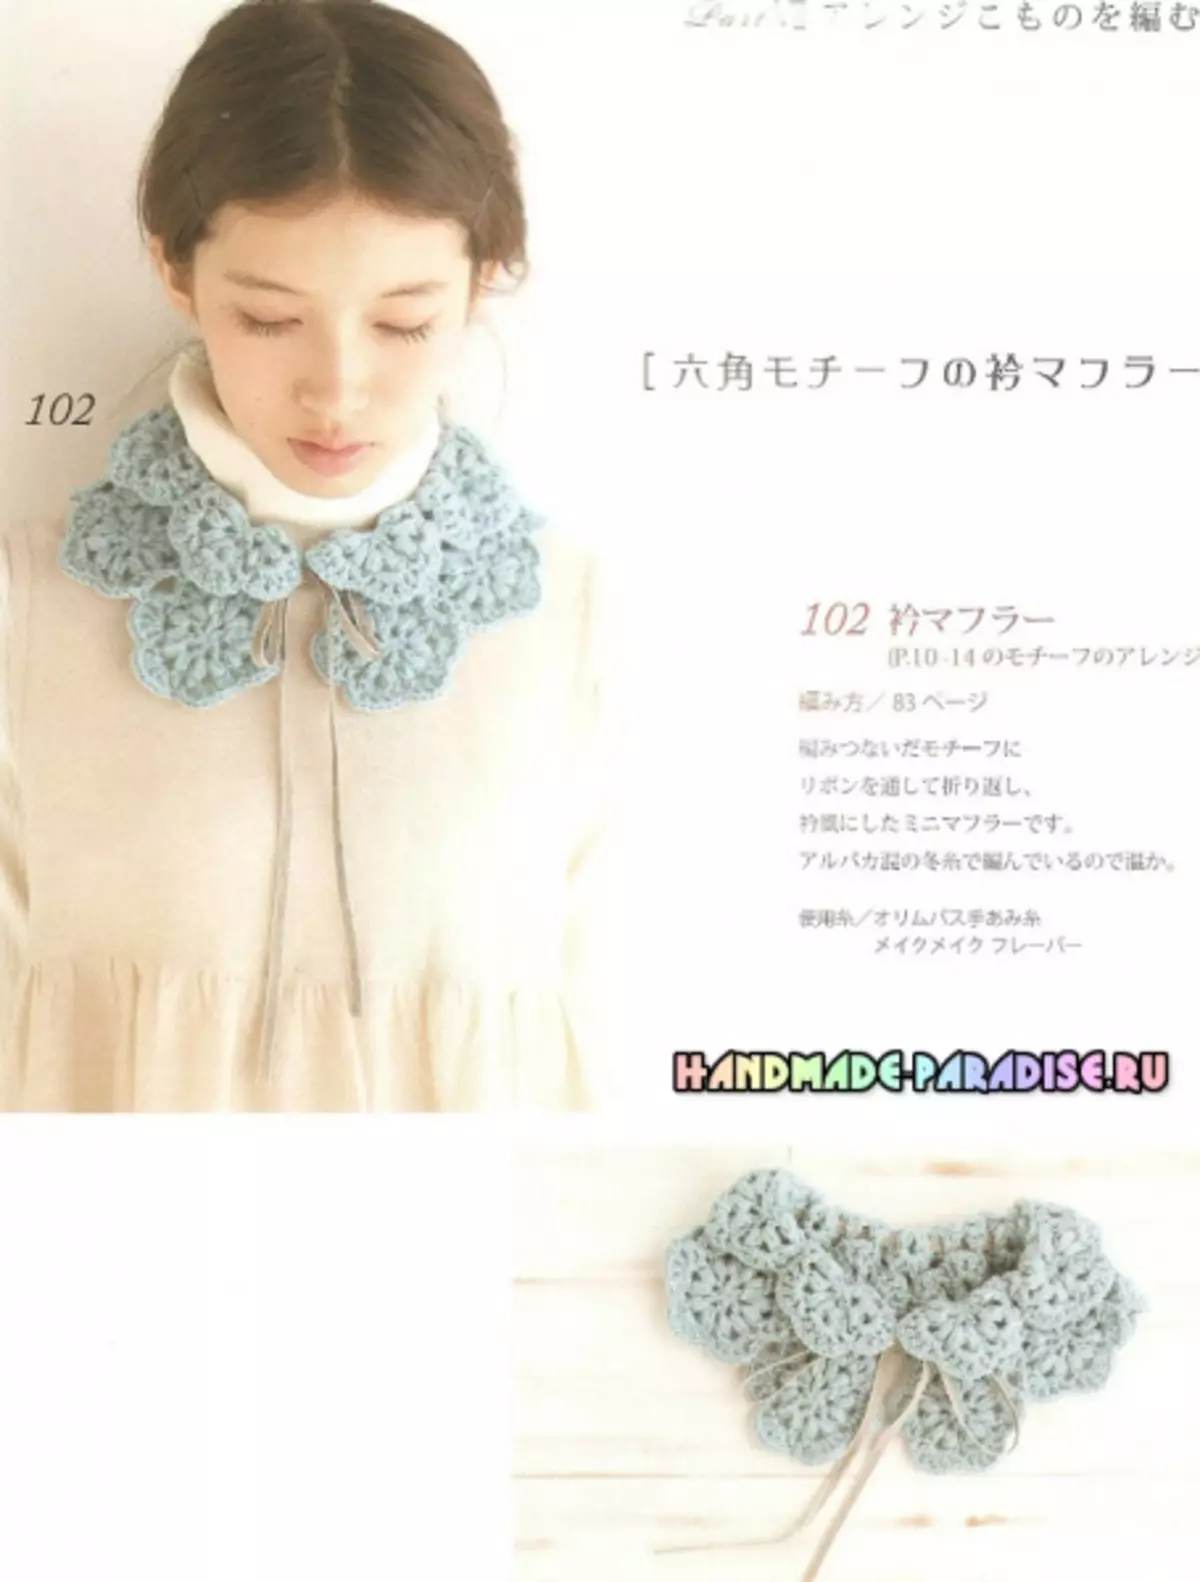 Japanese magazine with crochet schemes